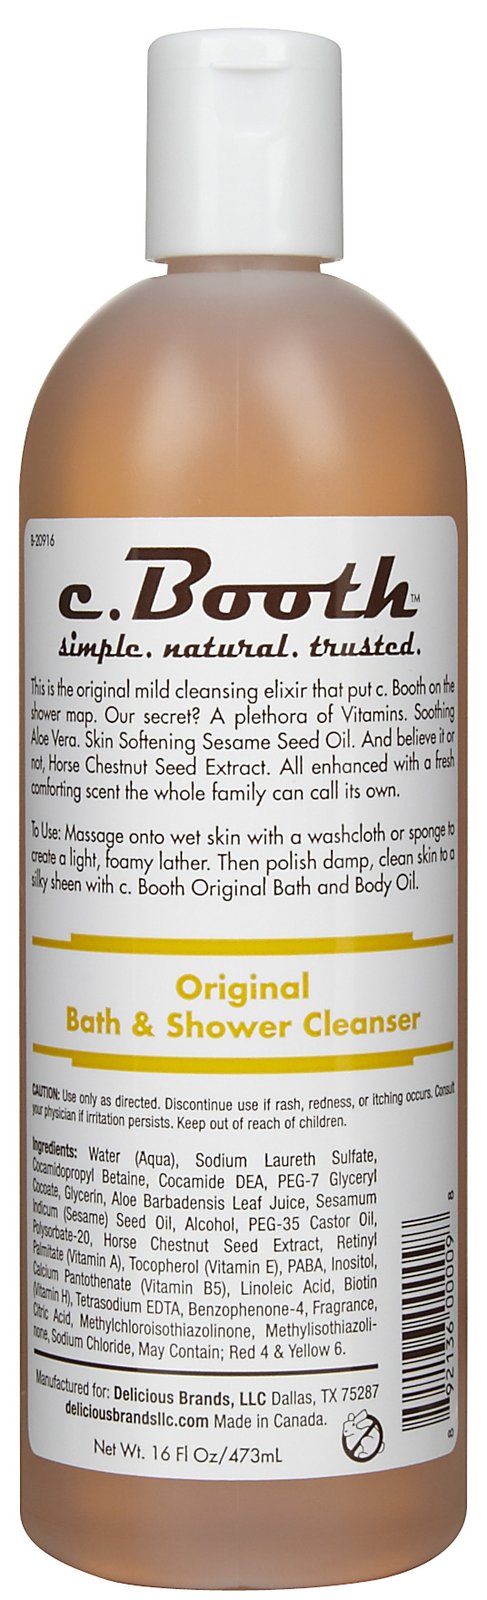 c. Booth Original Bath & Shower Cleanser